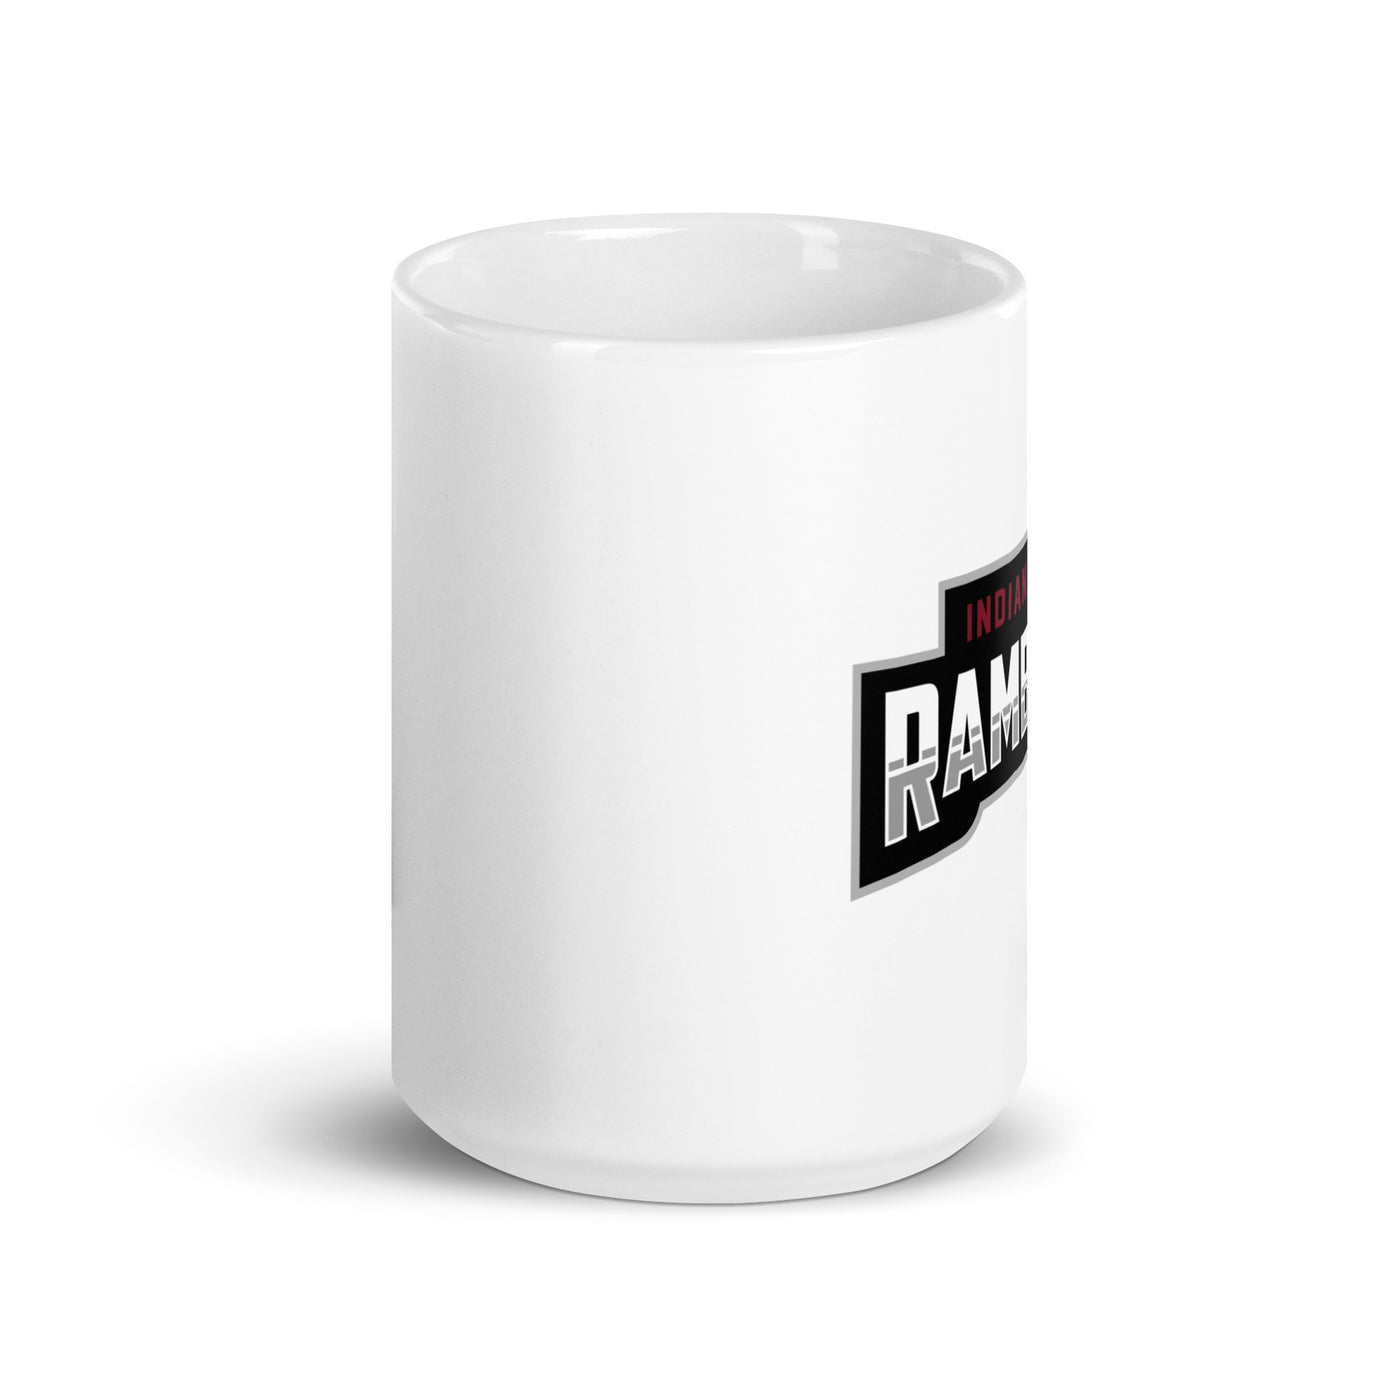 Indianapolis Ramblers White glossy mug